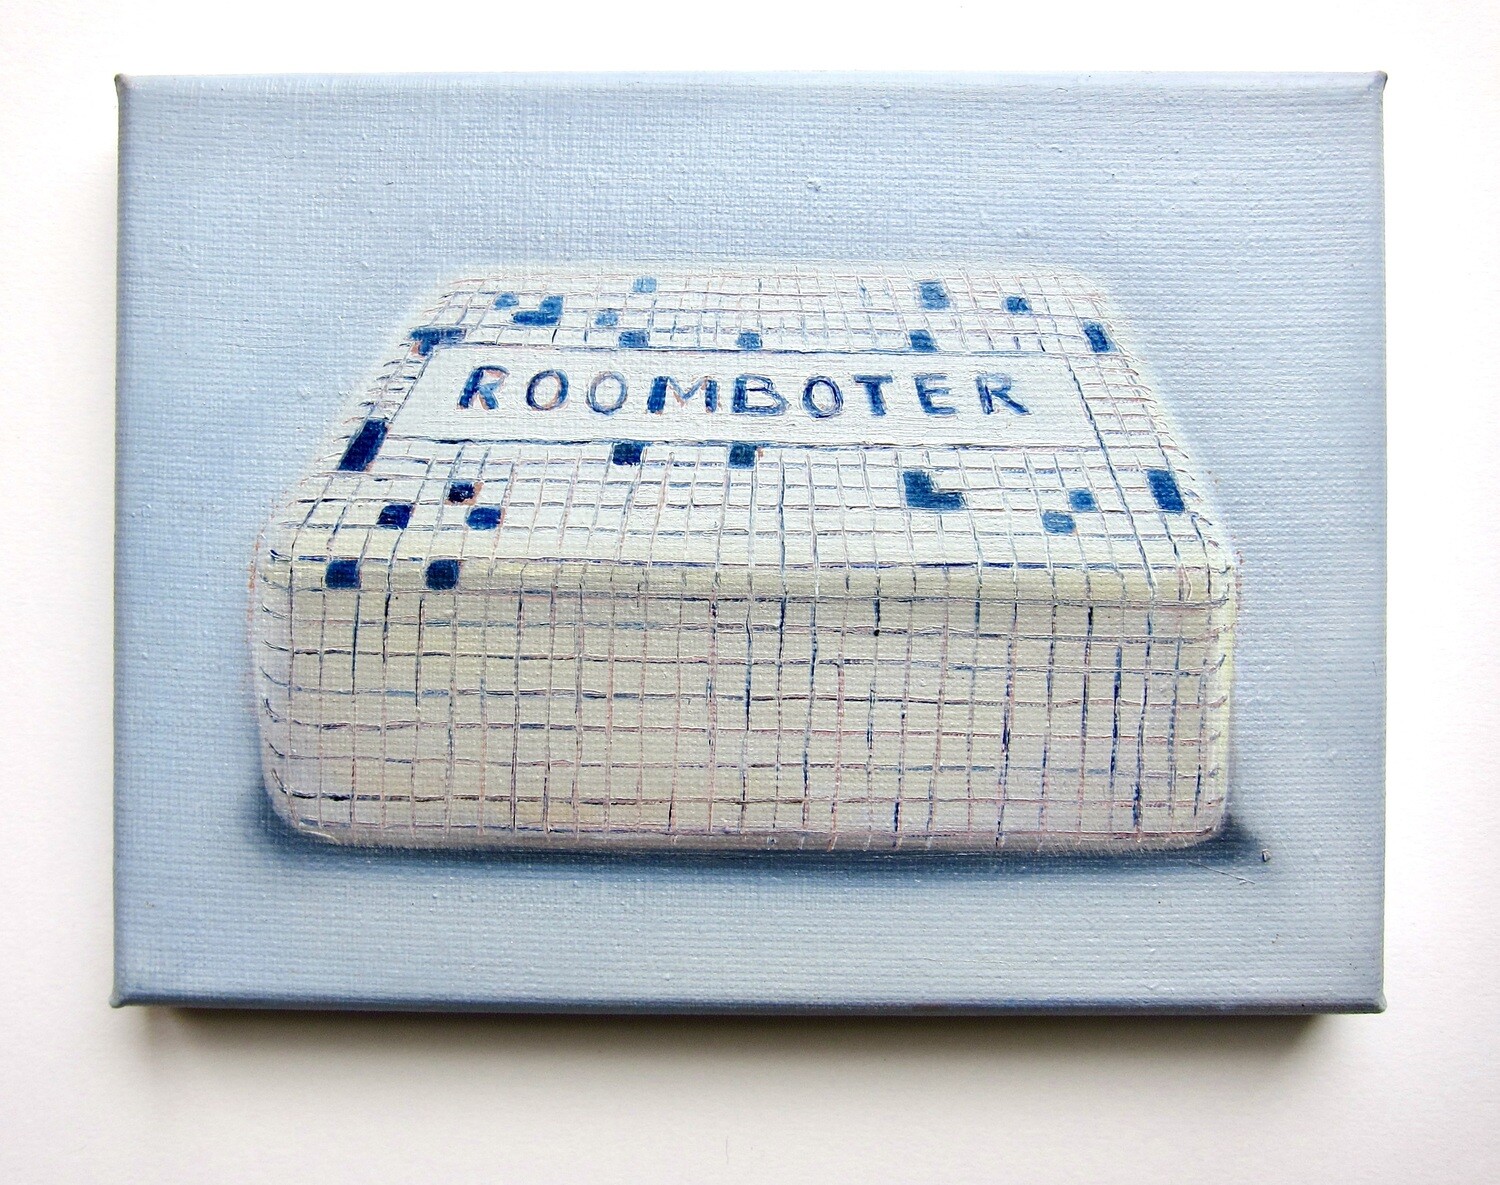 Roomboter / Cream Butter